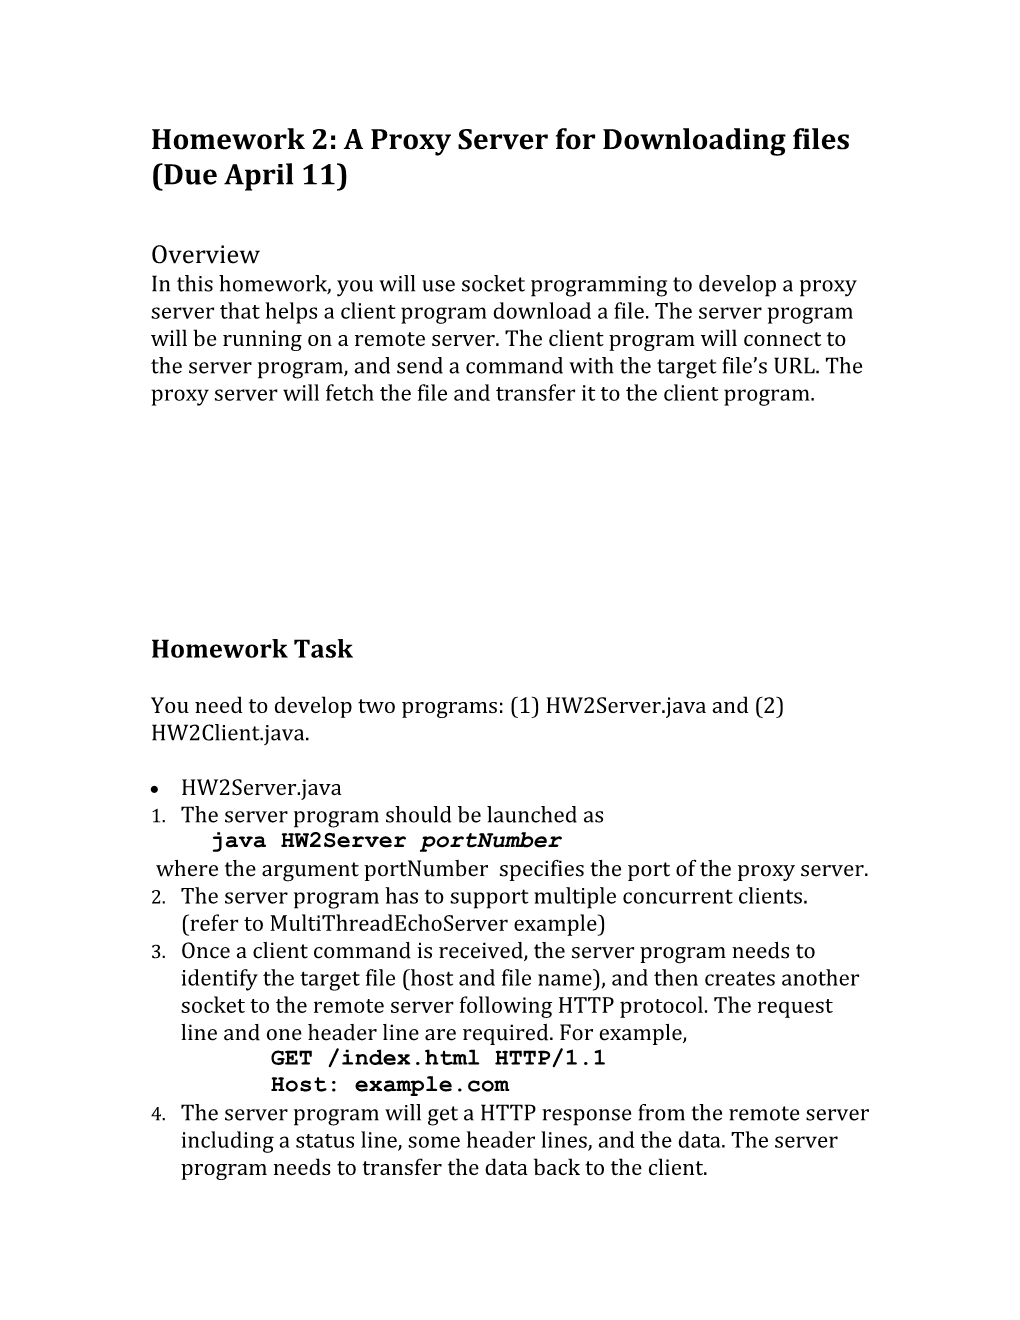 Homework 2: a Proxy Server for Downloading Files (Due April11)